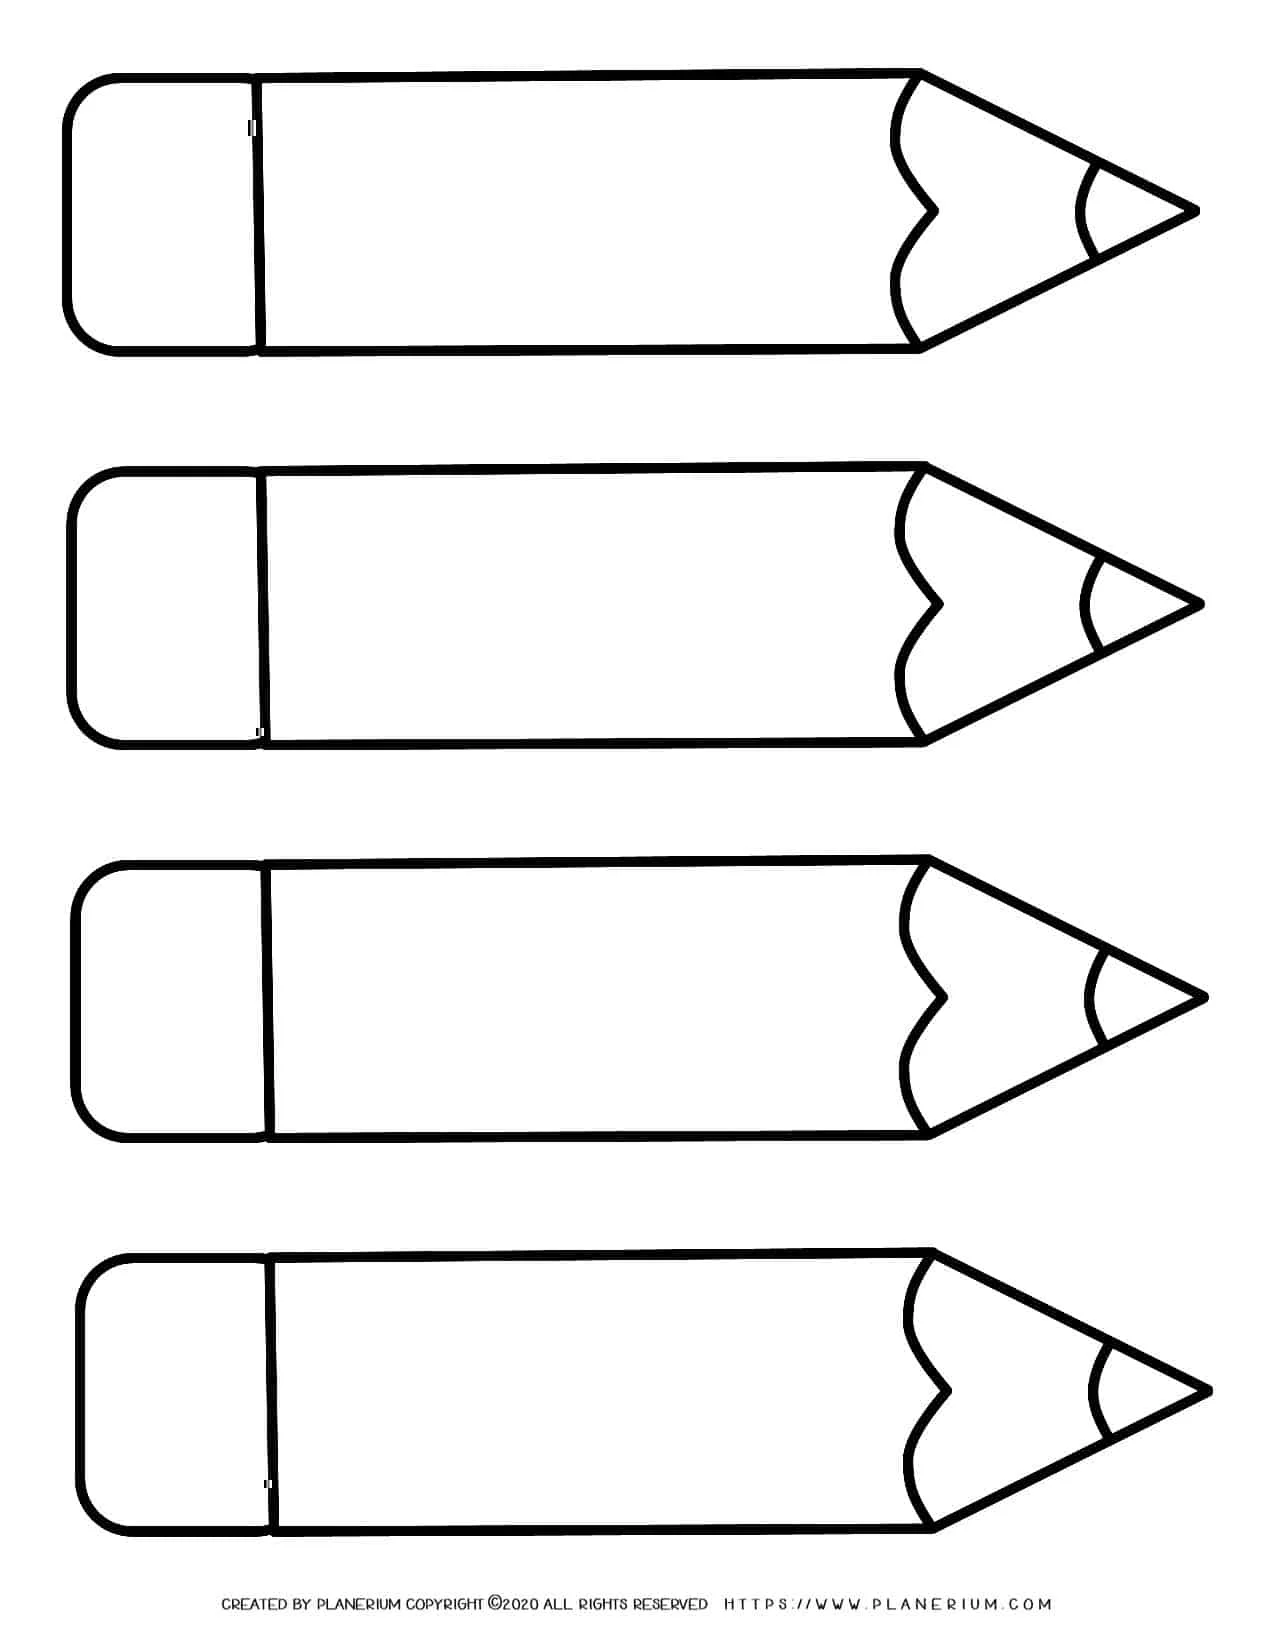 Four pencils template